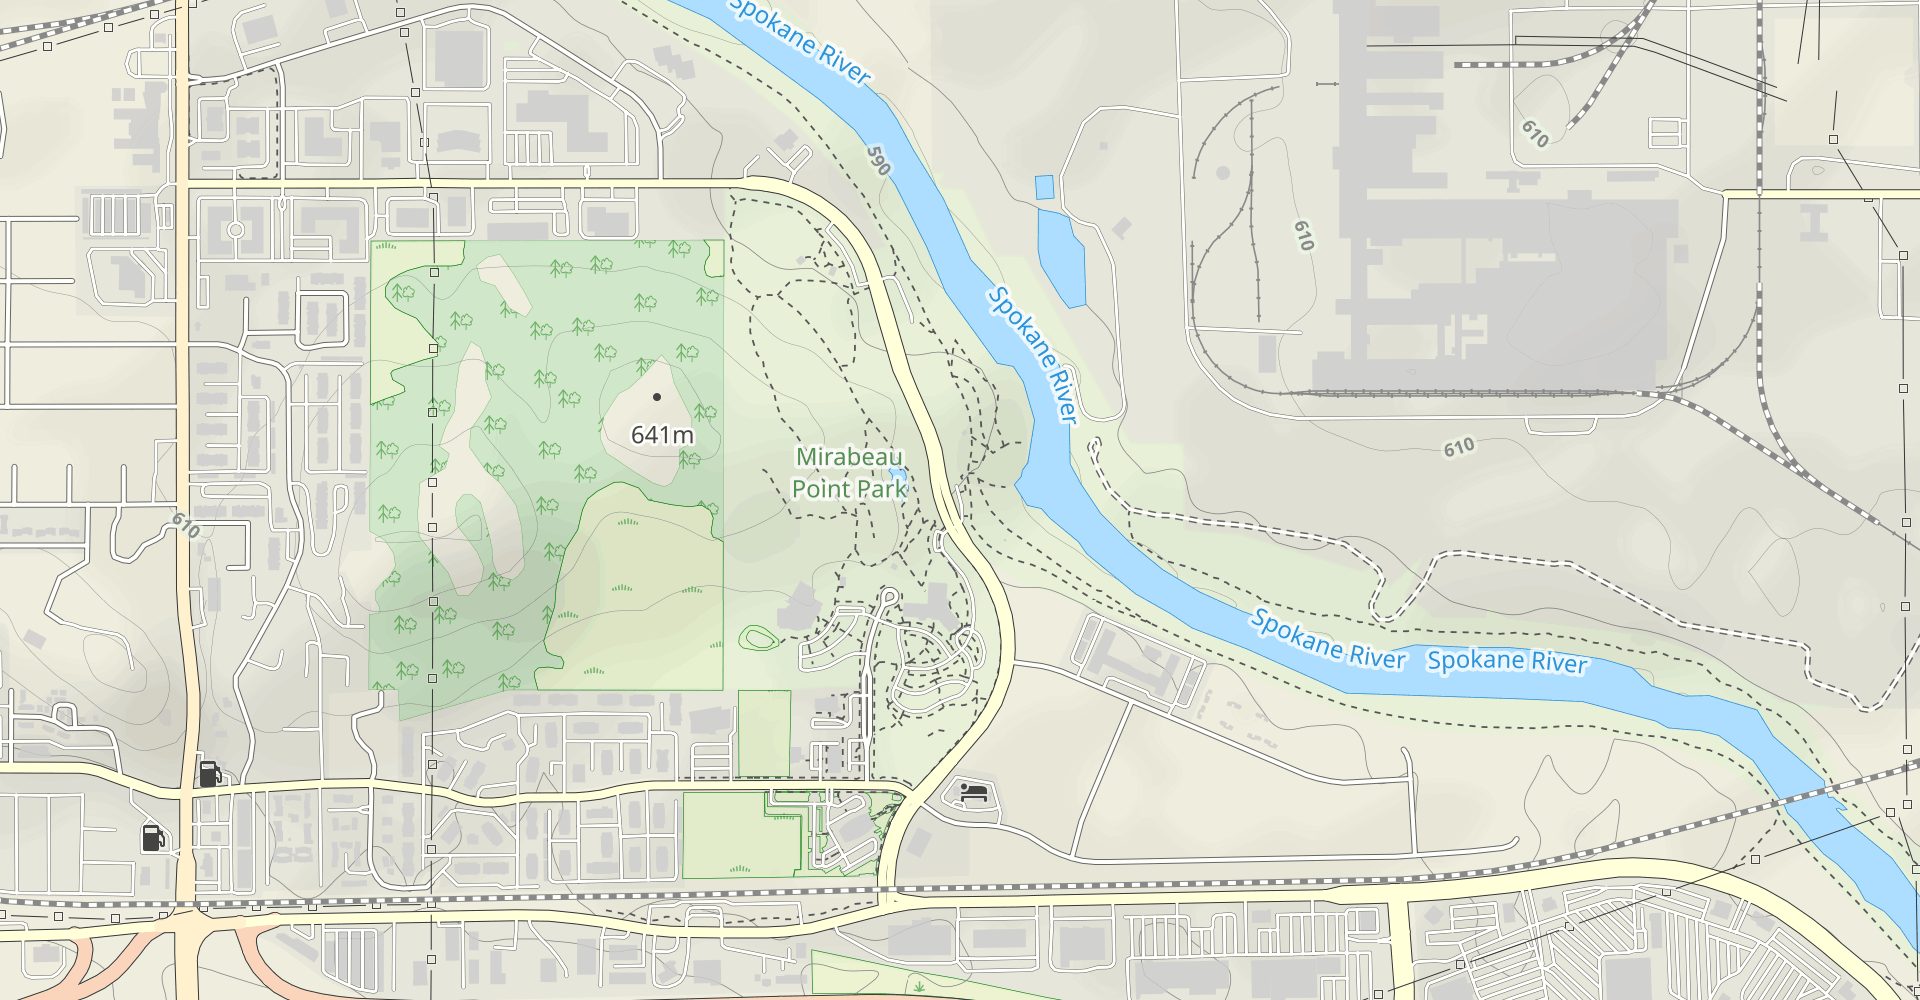 Spokane River Centennial Trail from East Euclid Avenue